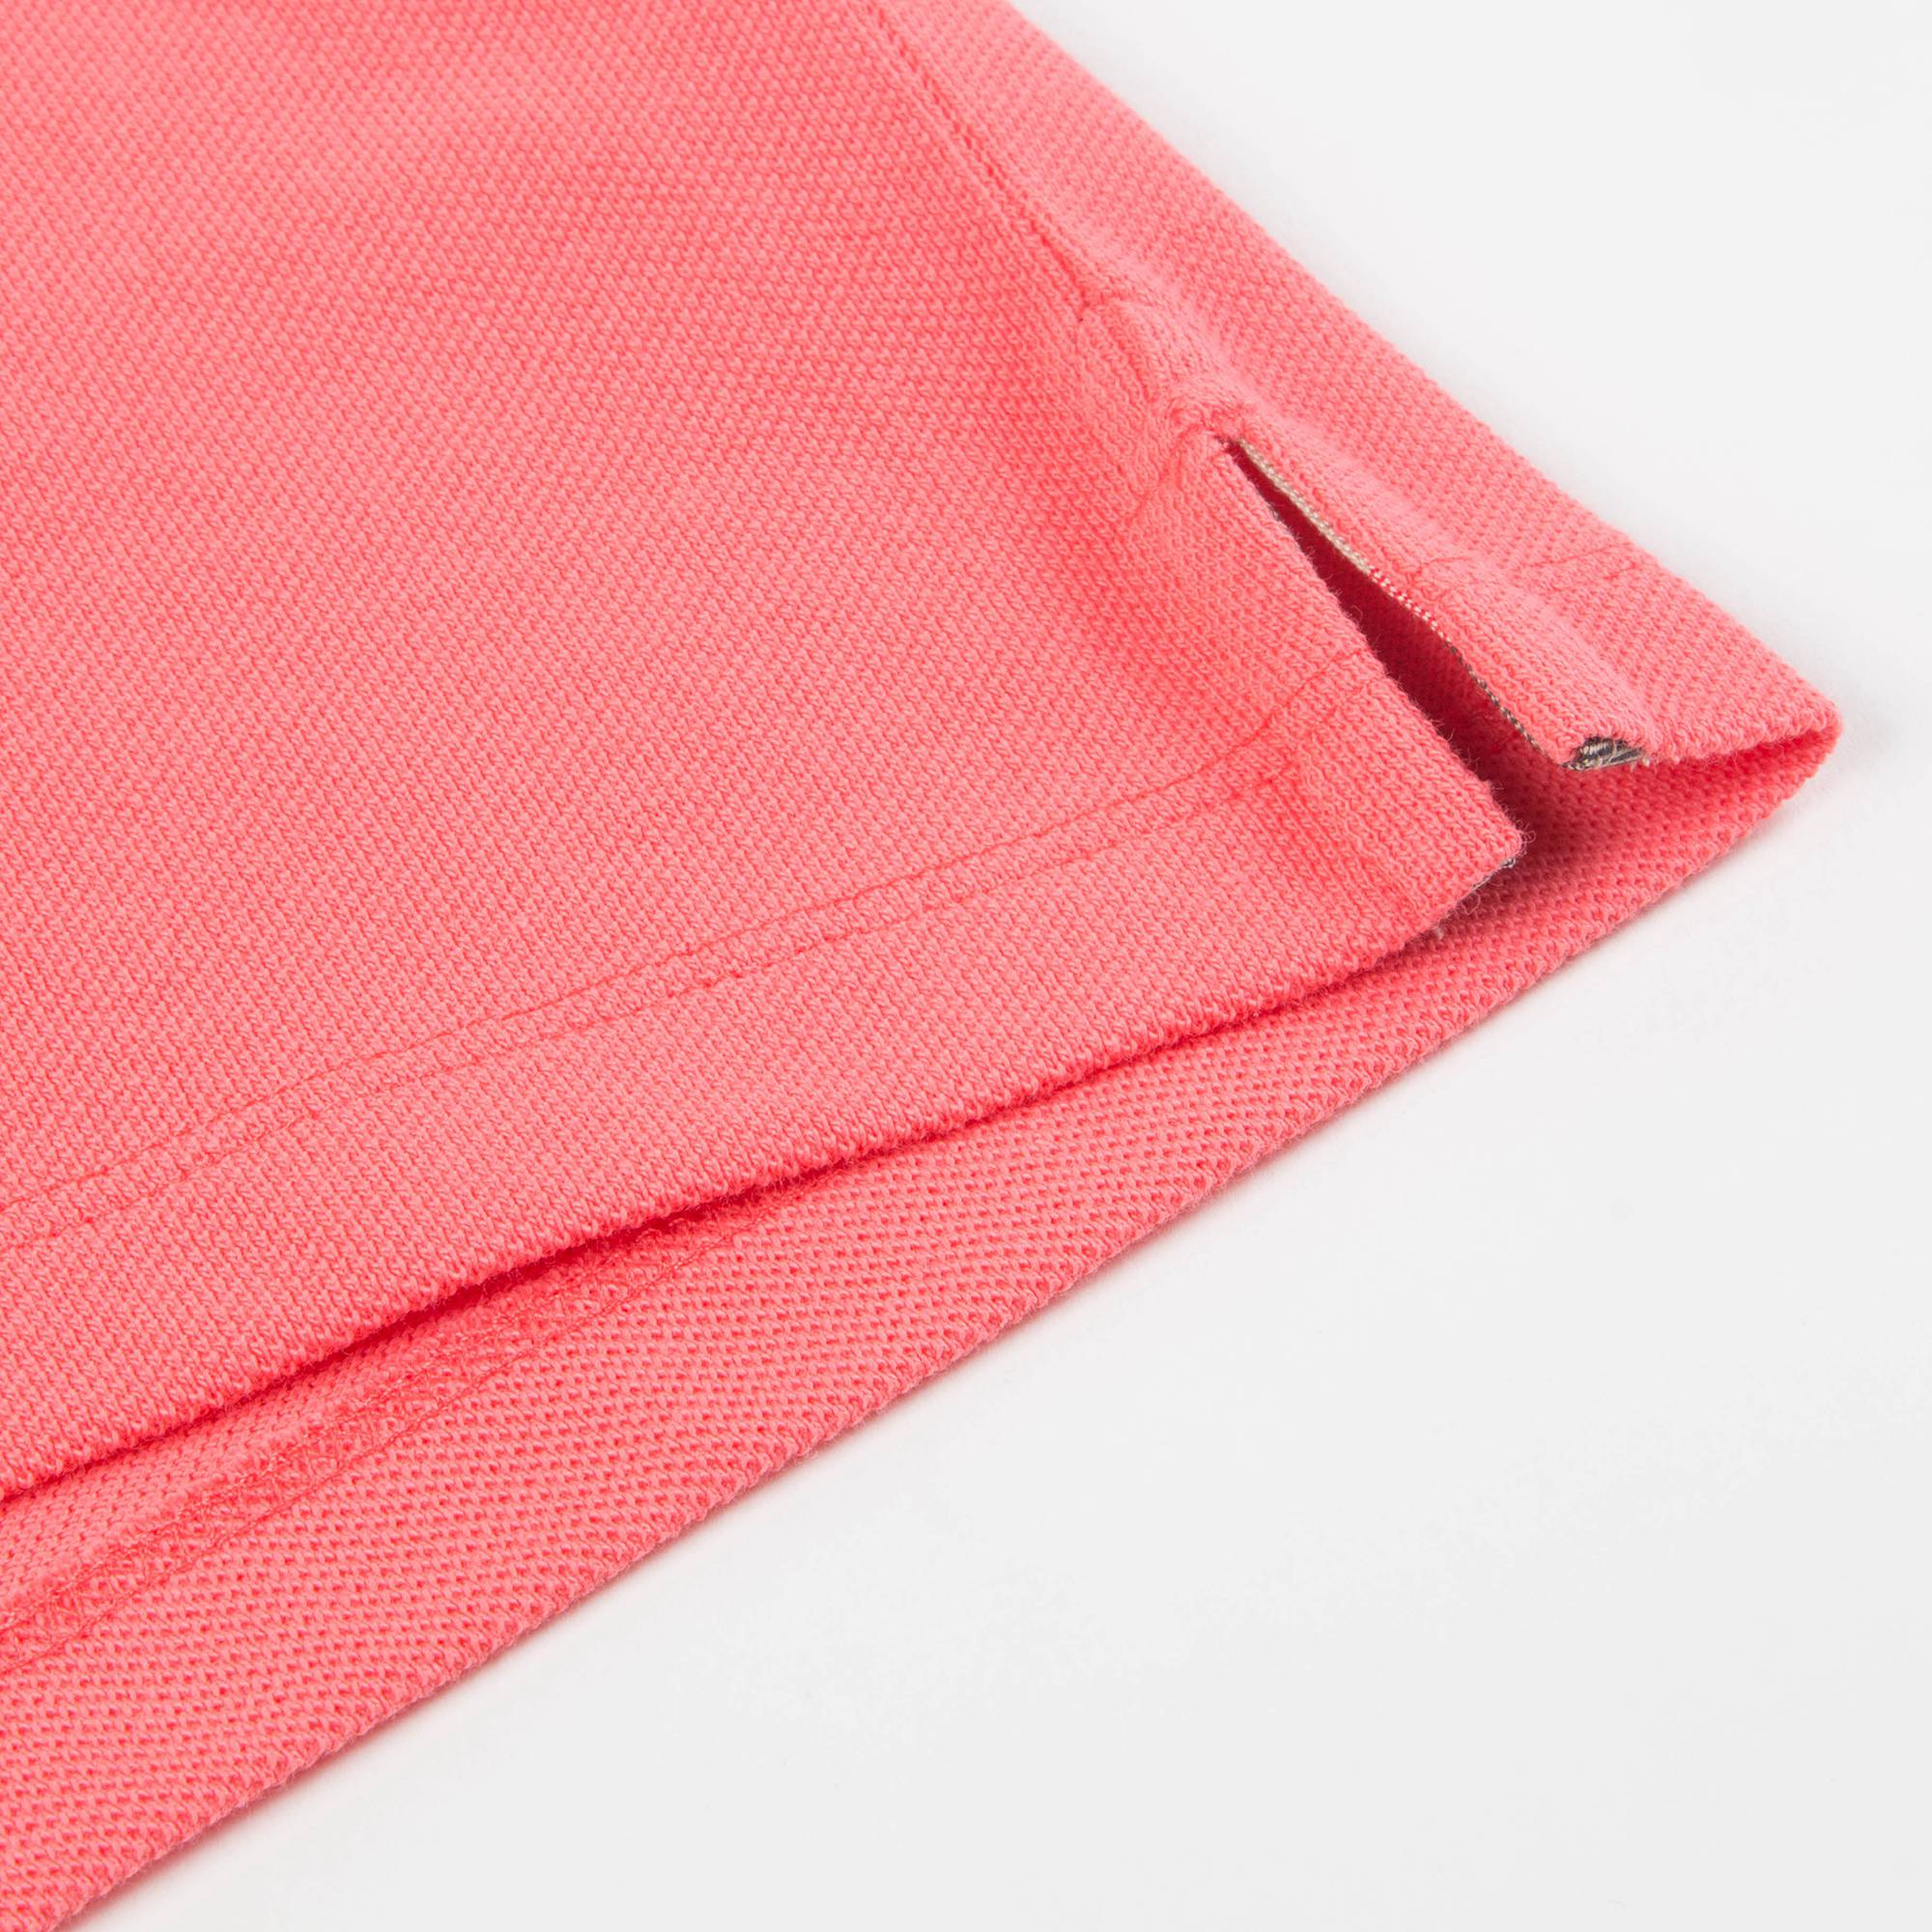 Boys Bright Coral Pink Cotton Polo Shirt